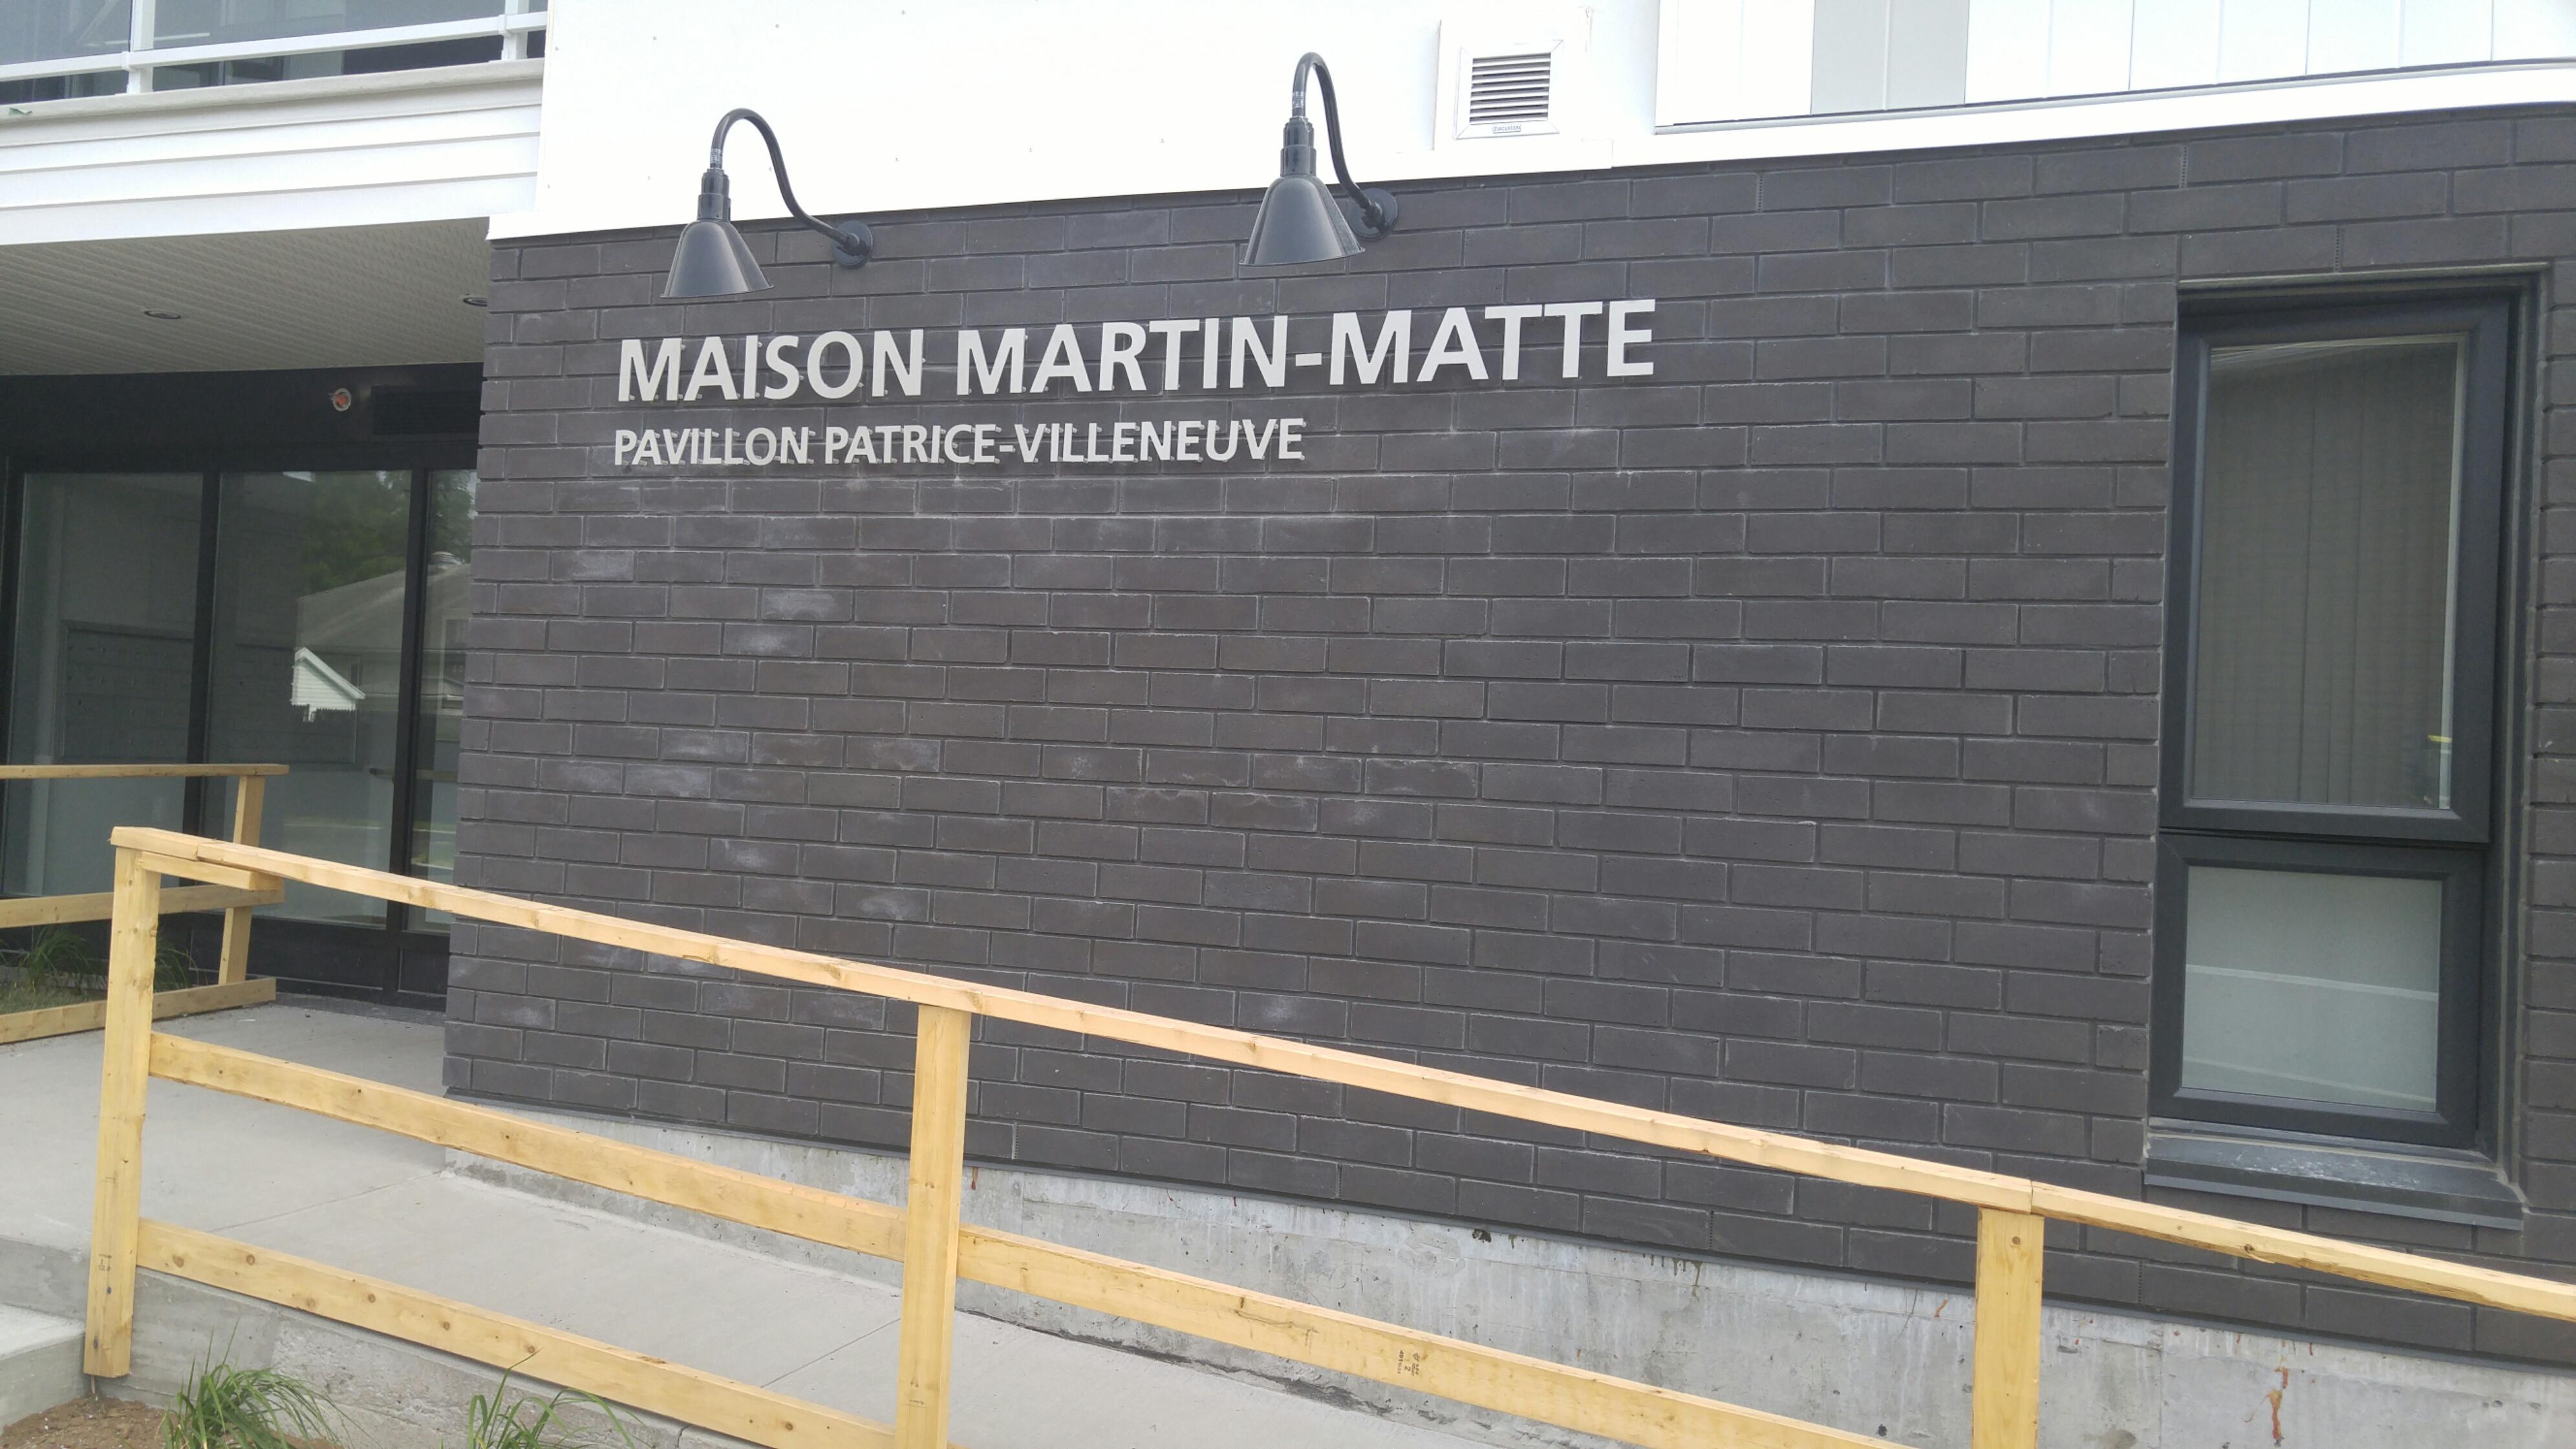 Maison Martin-Matte Pavillon Patrice-Villeneuve (1)